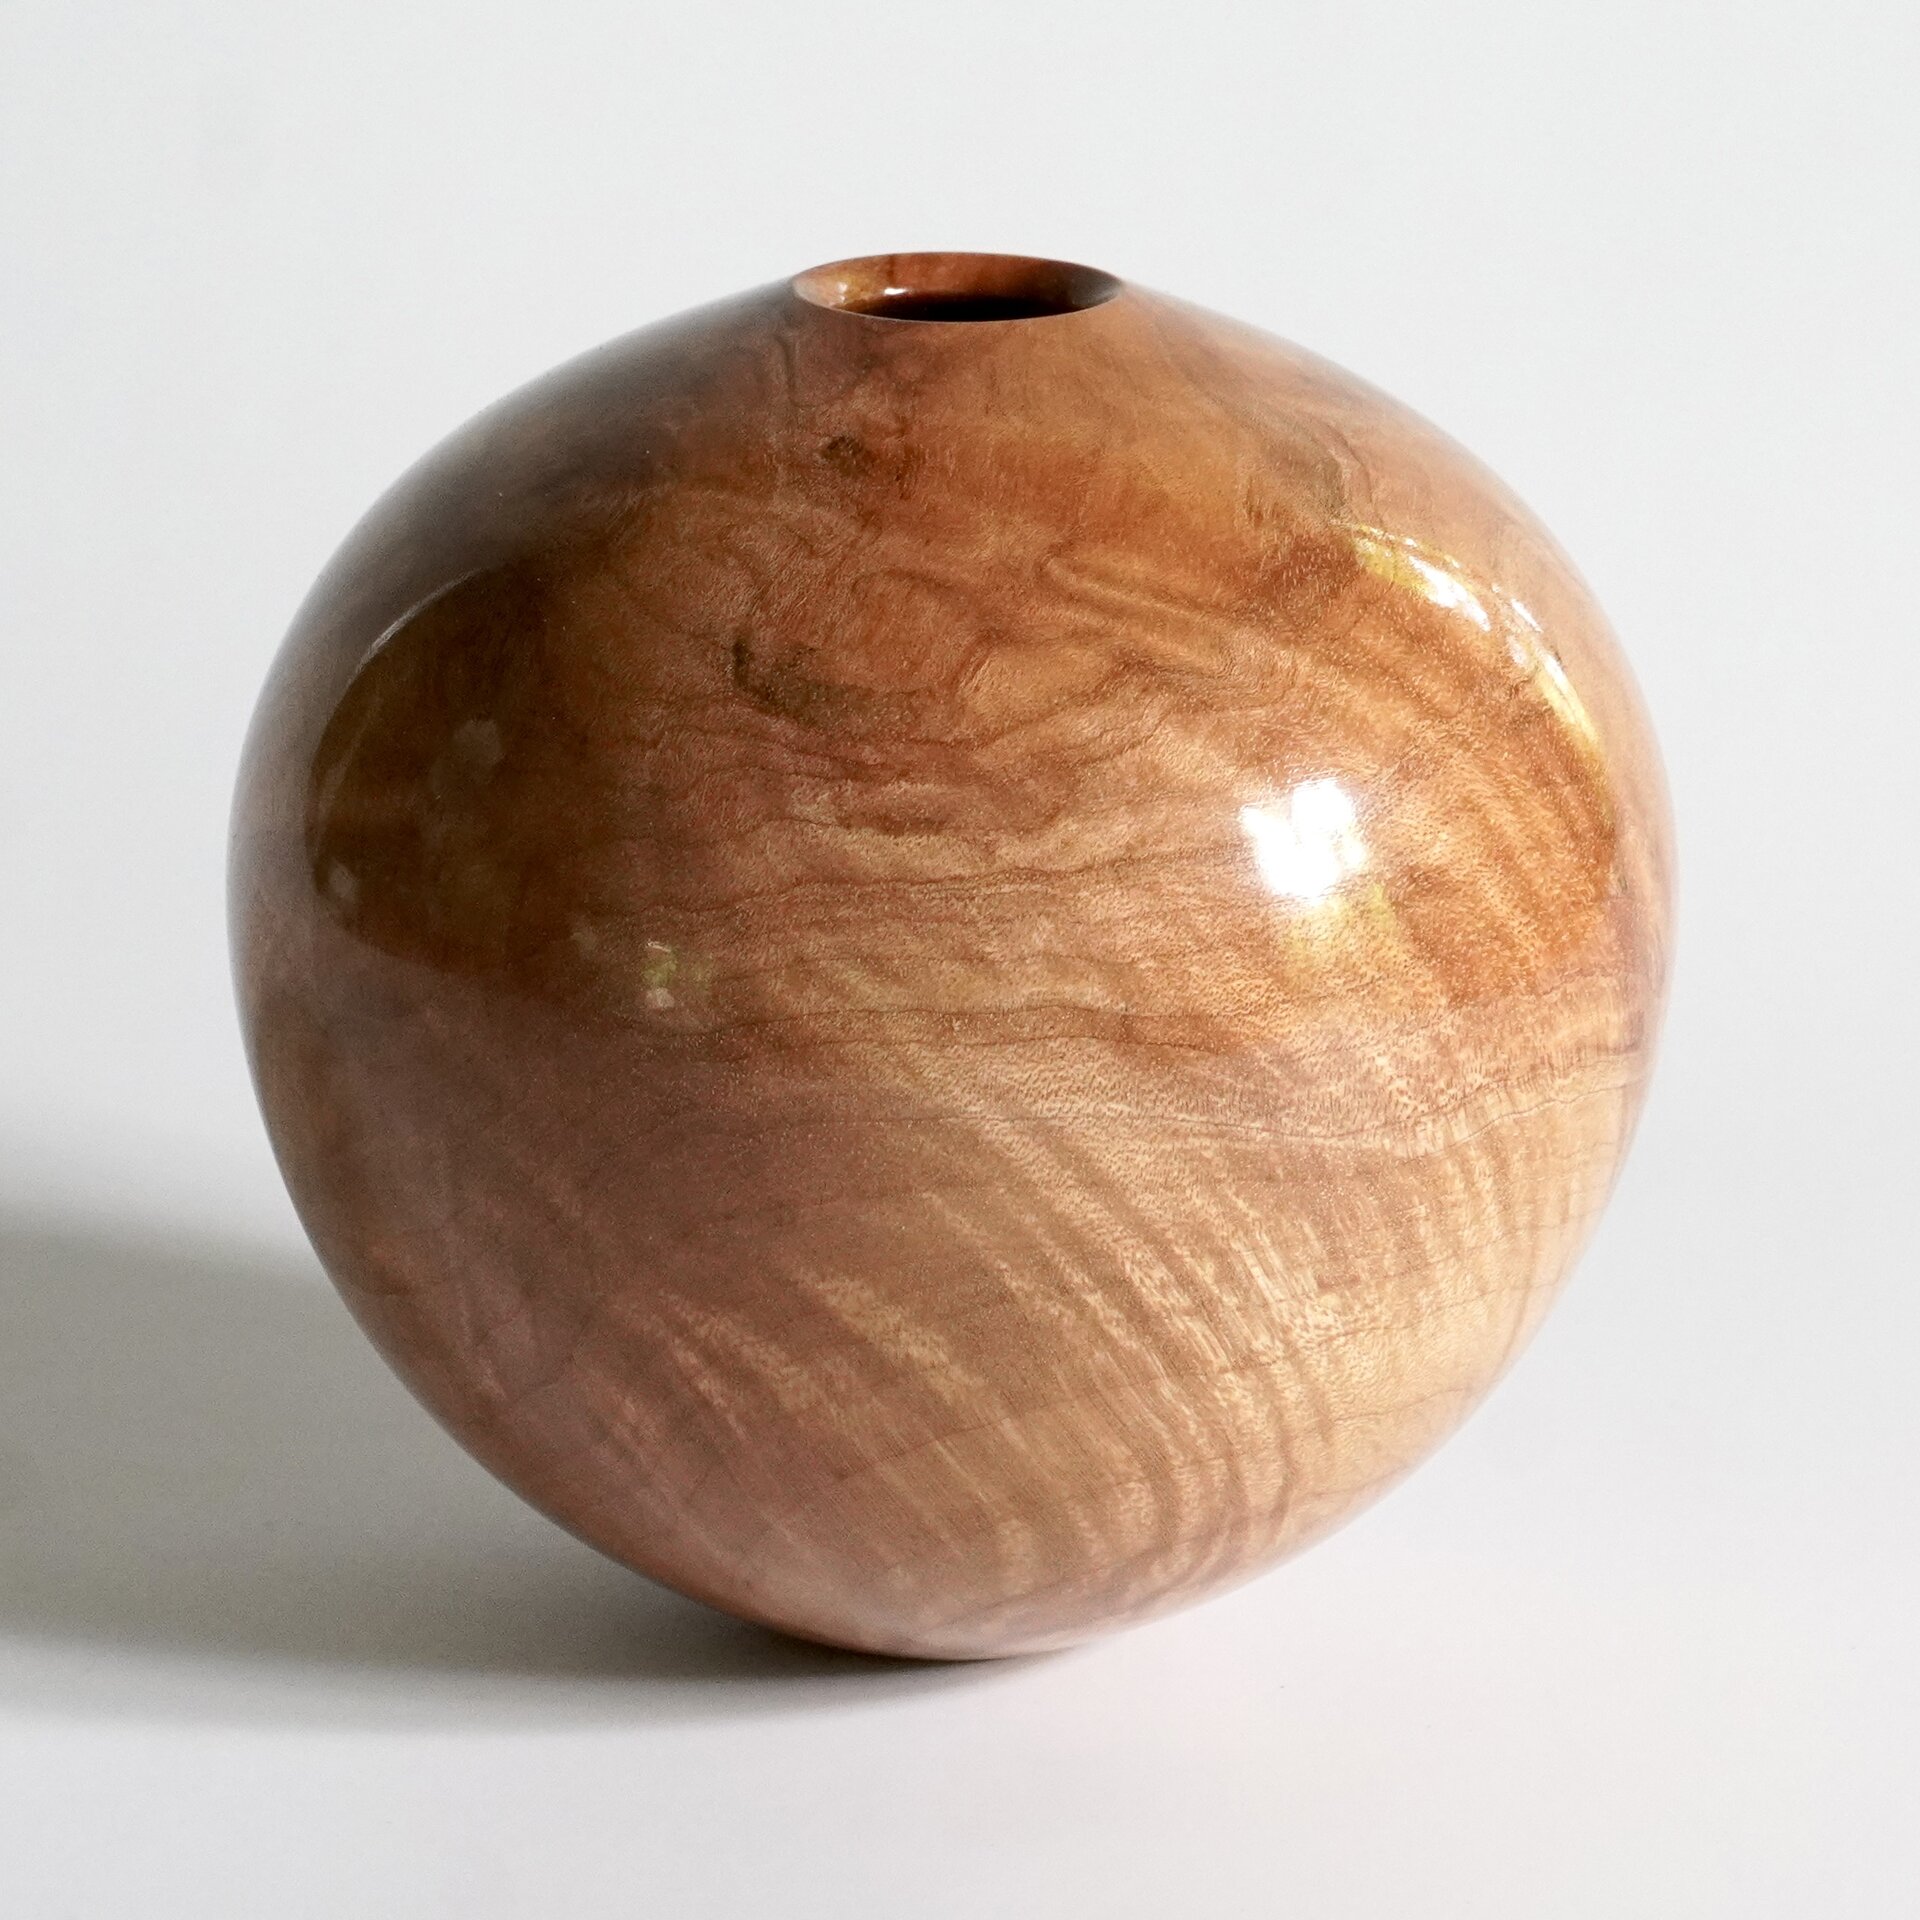 Applewood burl hollow form #2